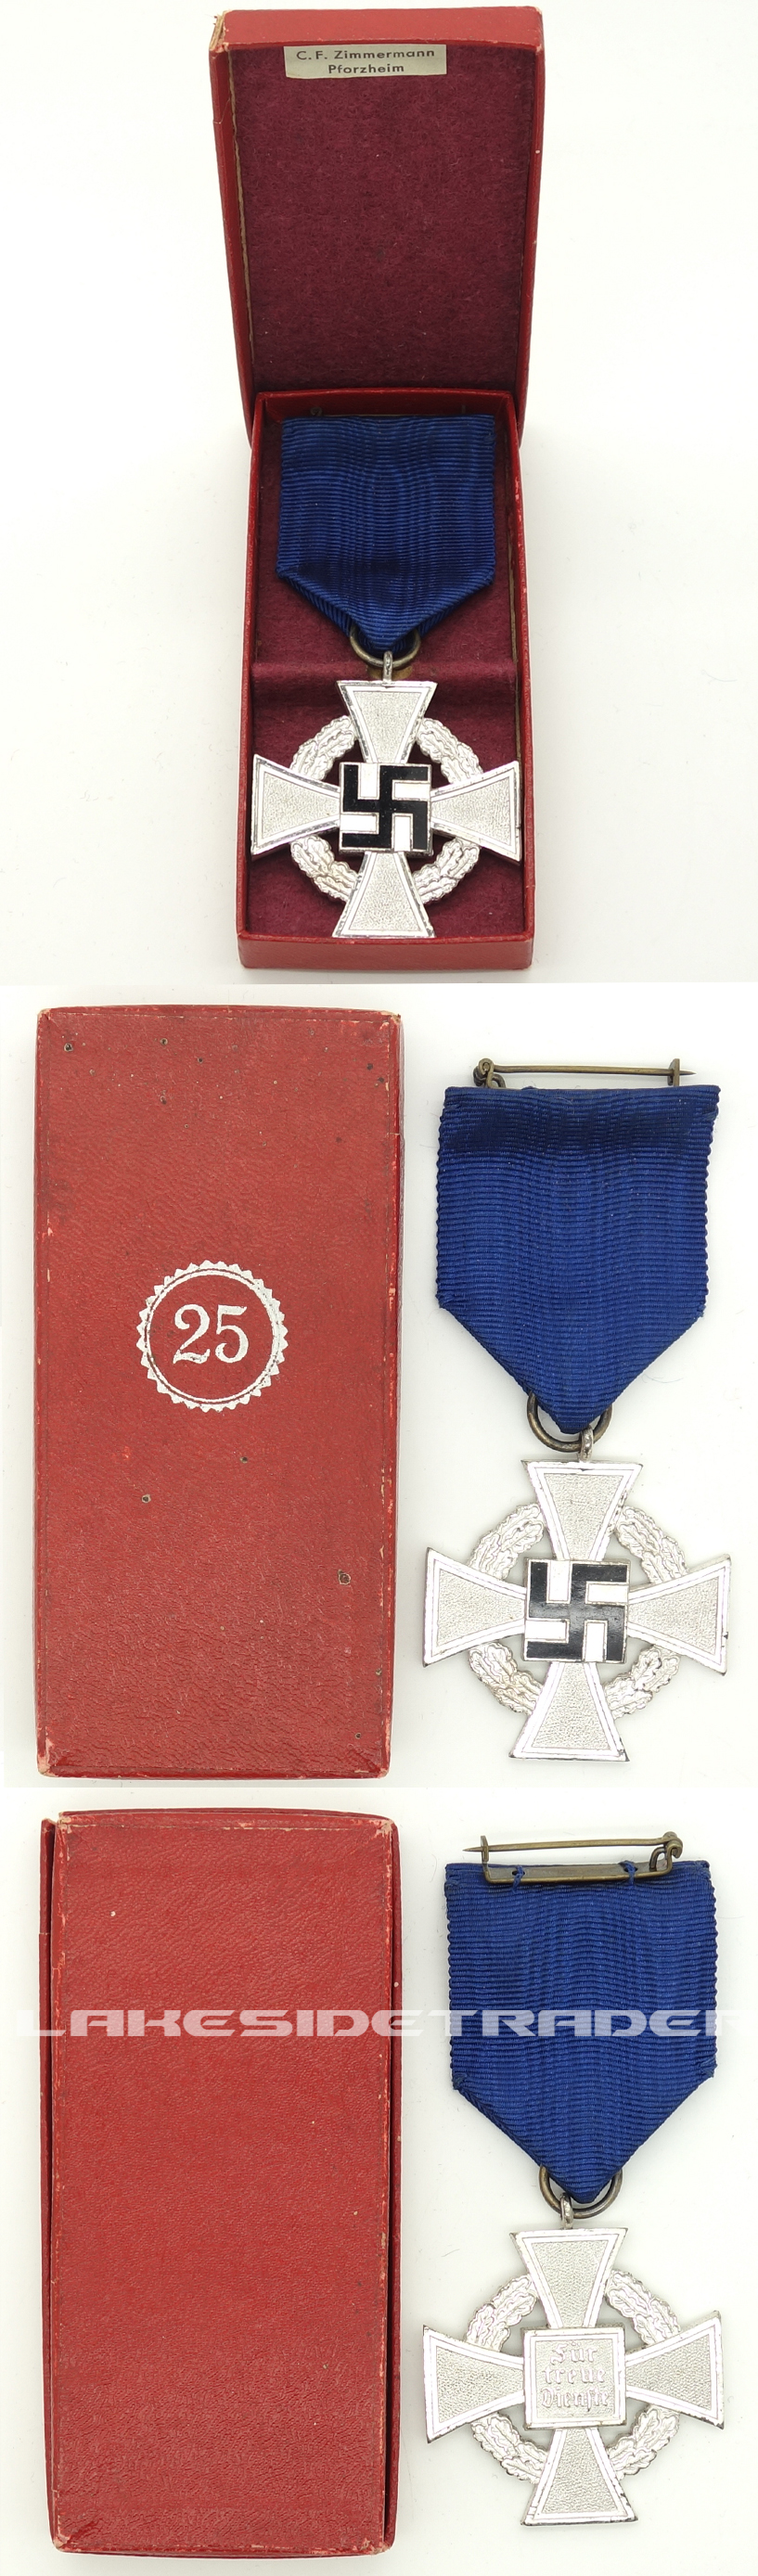 Cased 25 Year Faithful Service Cross